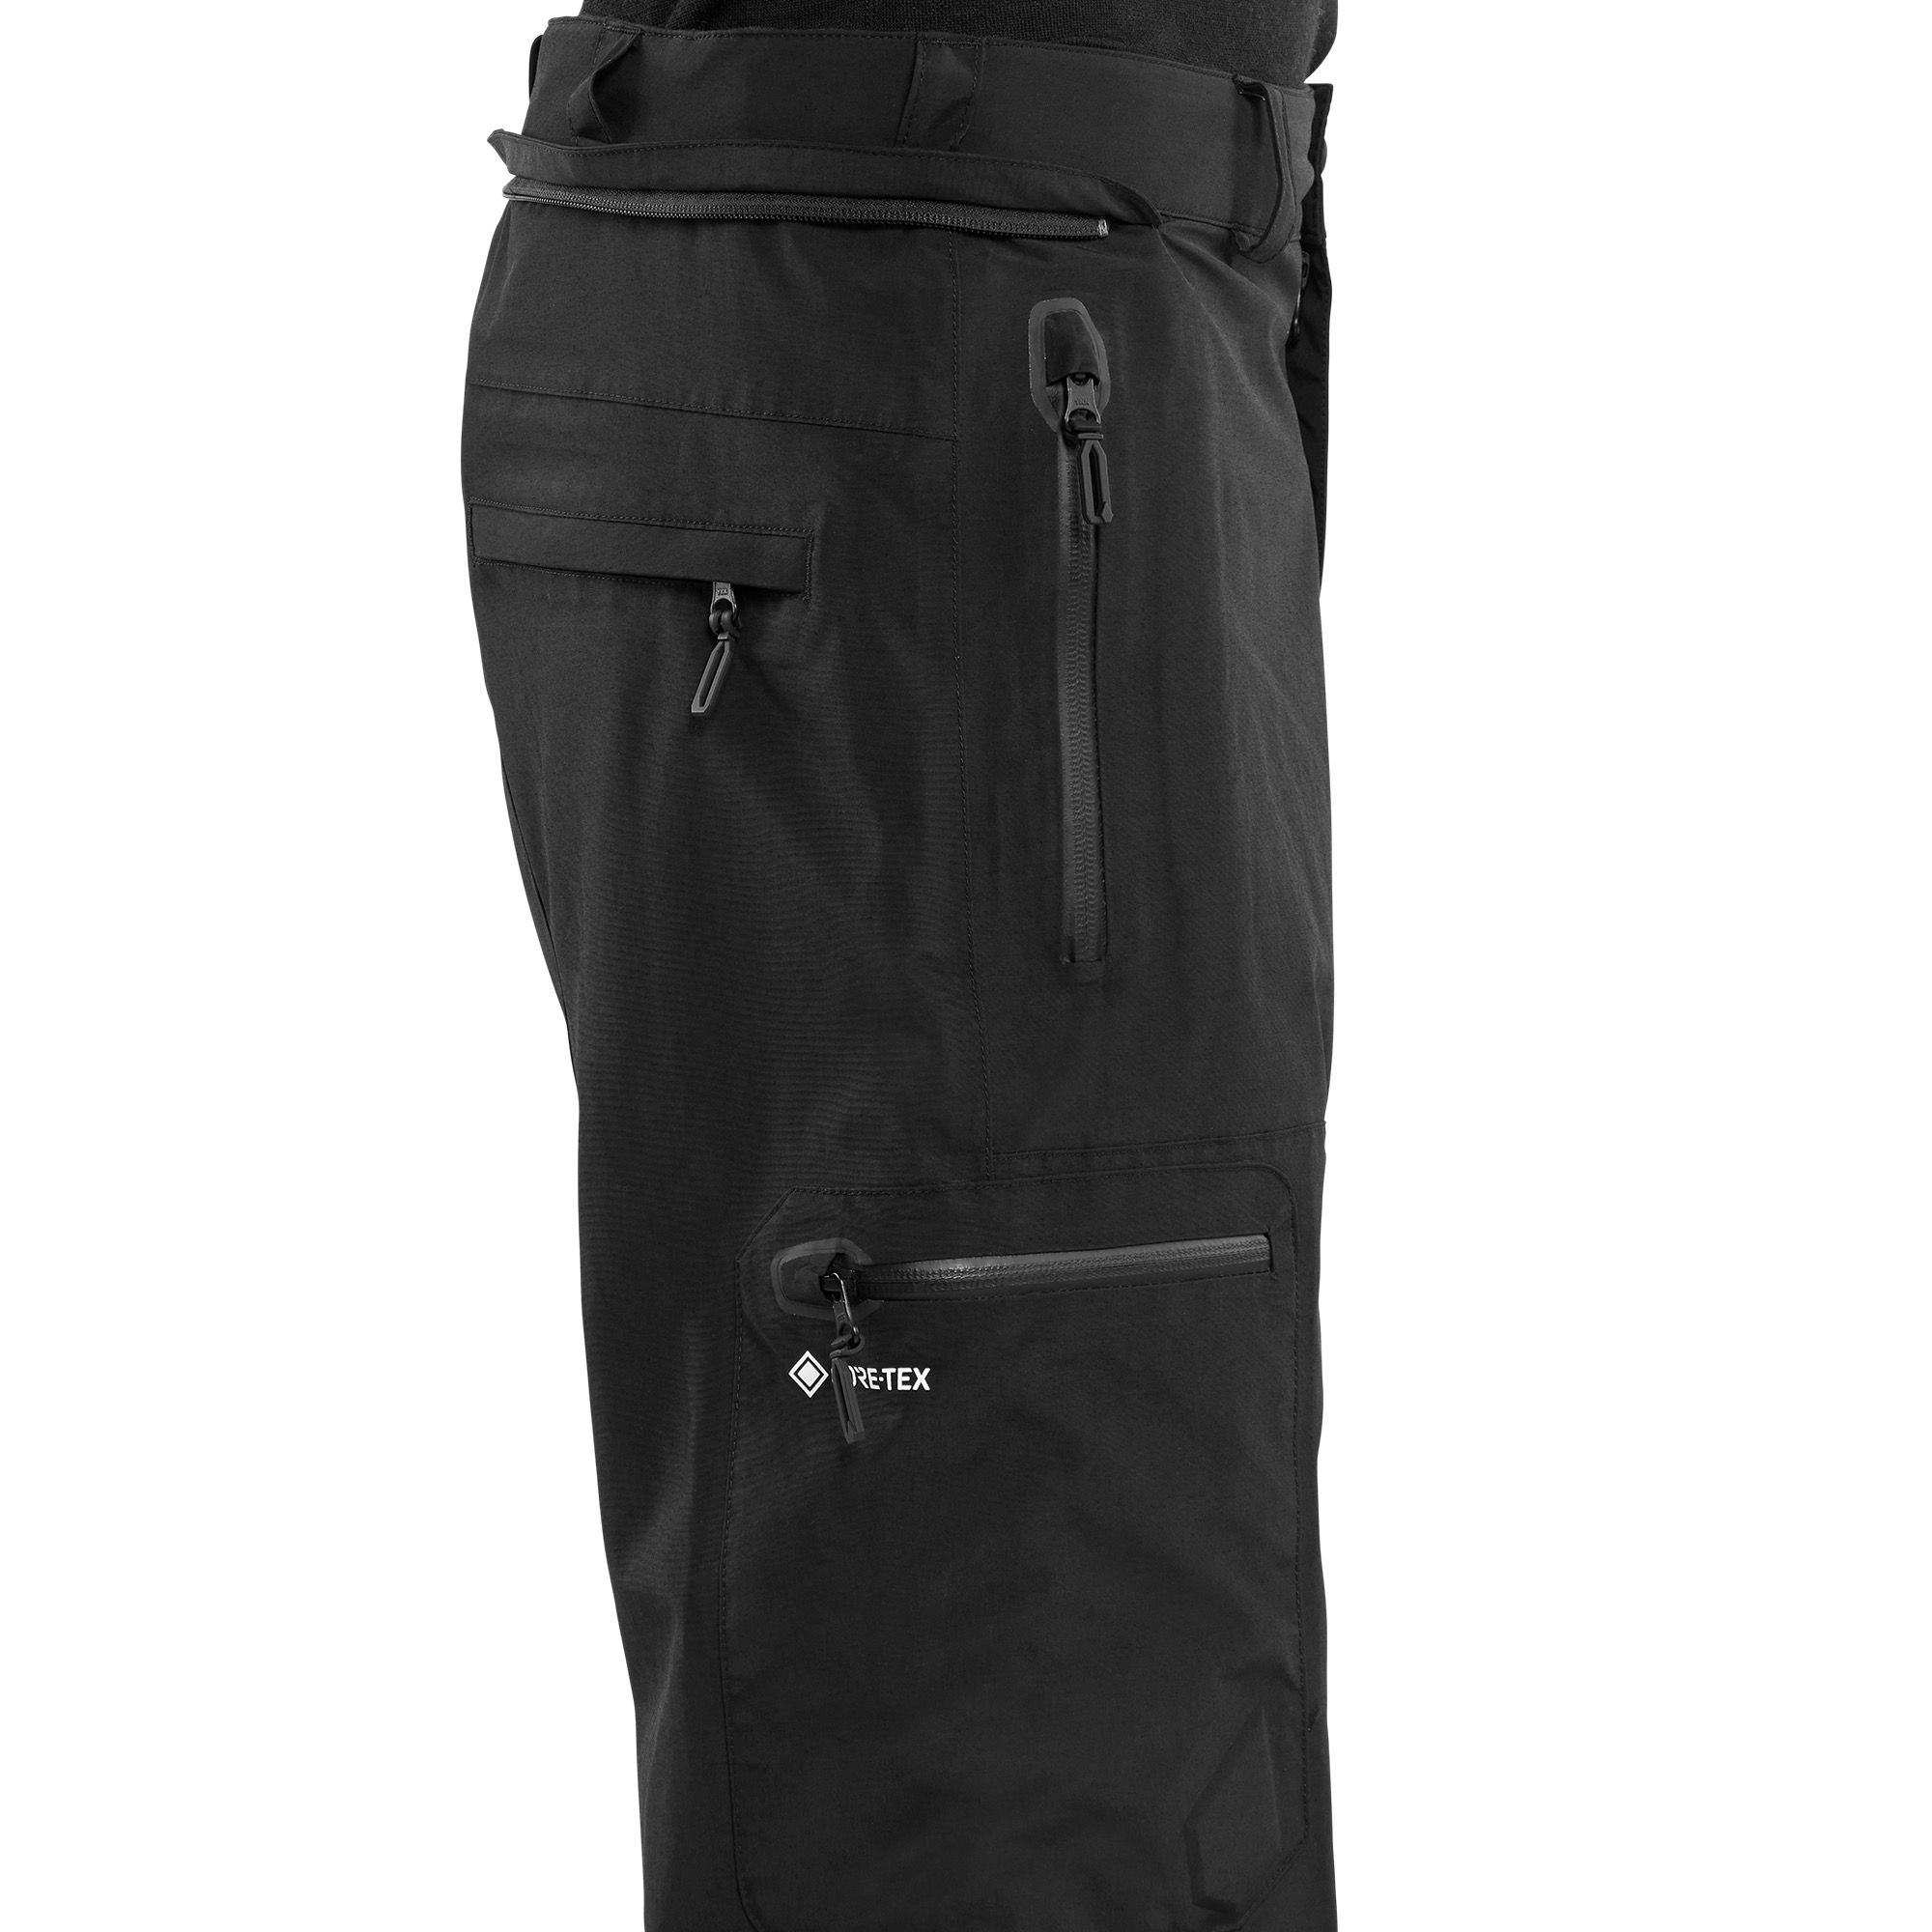 Pantalon de Ski L Gore-Tex Pant - Black